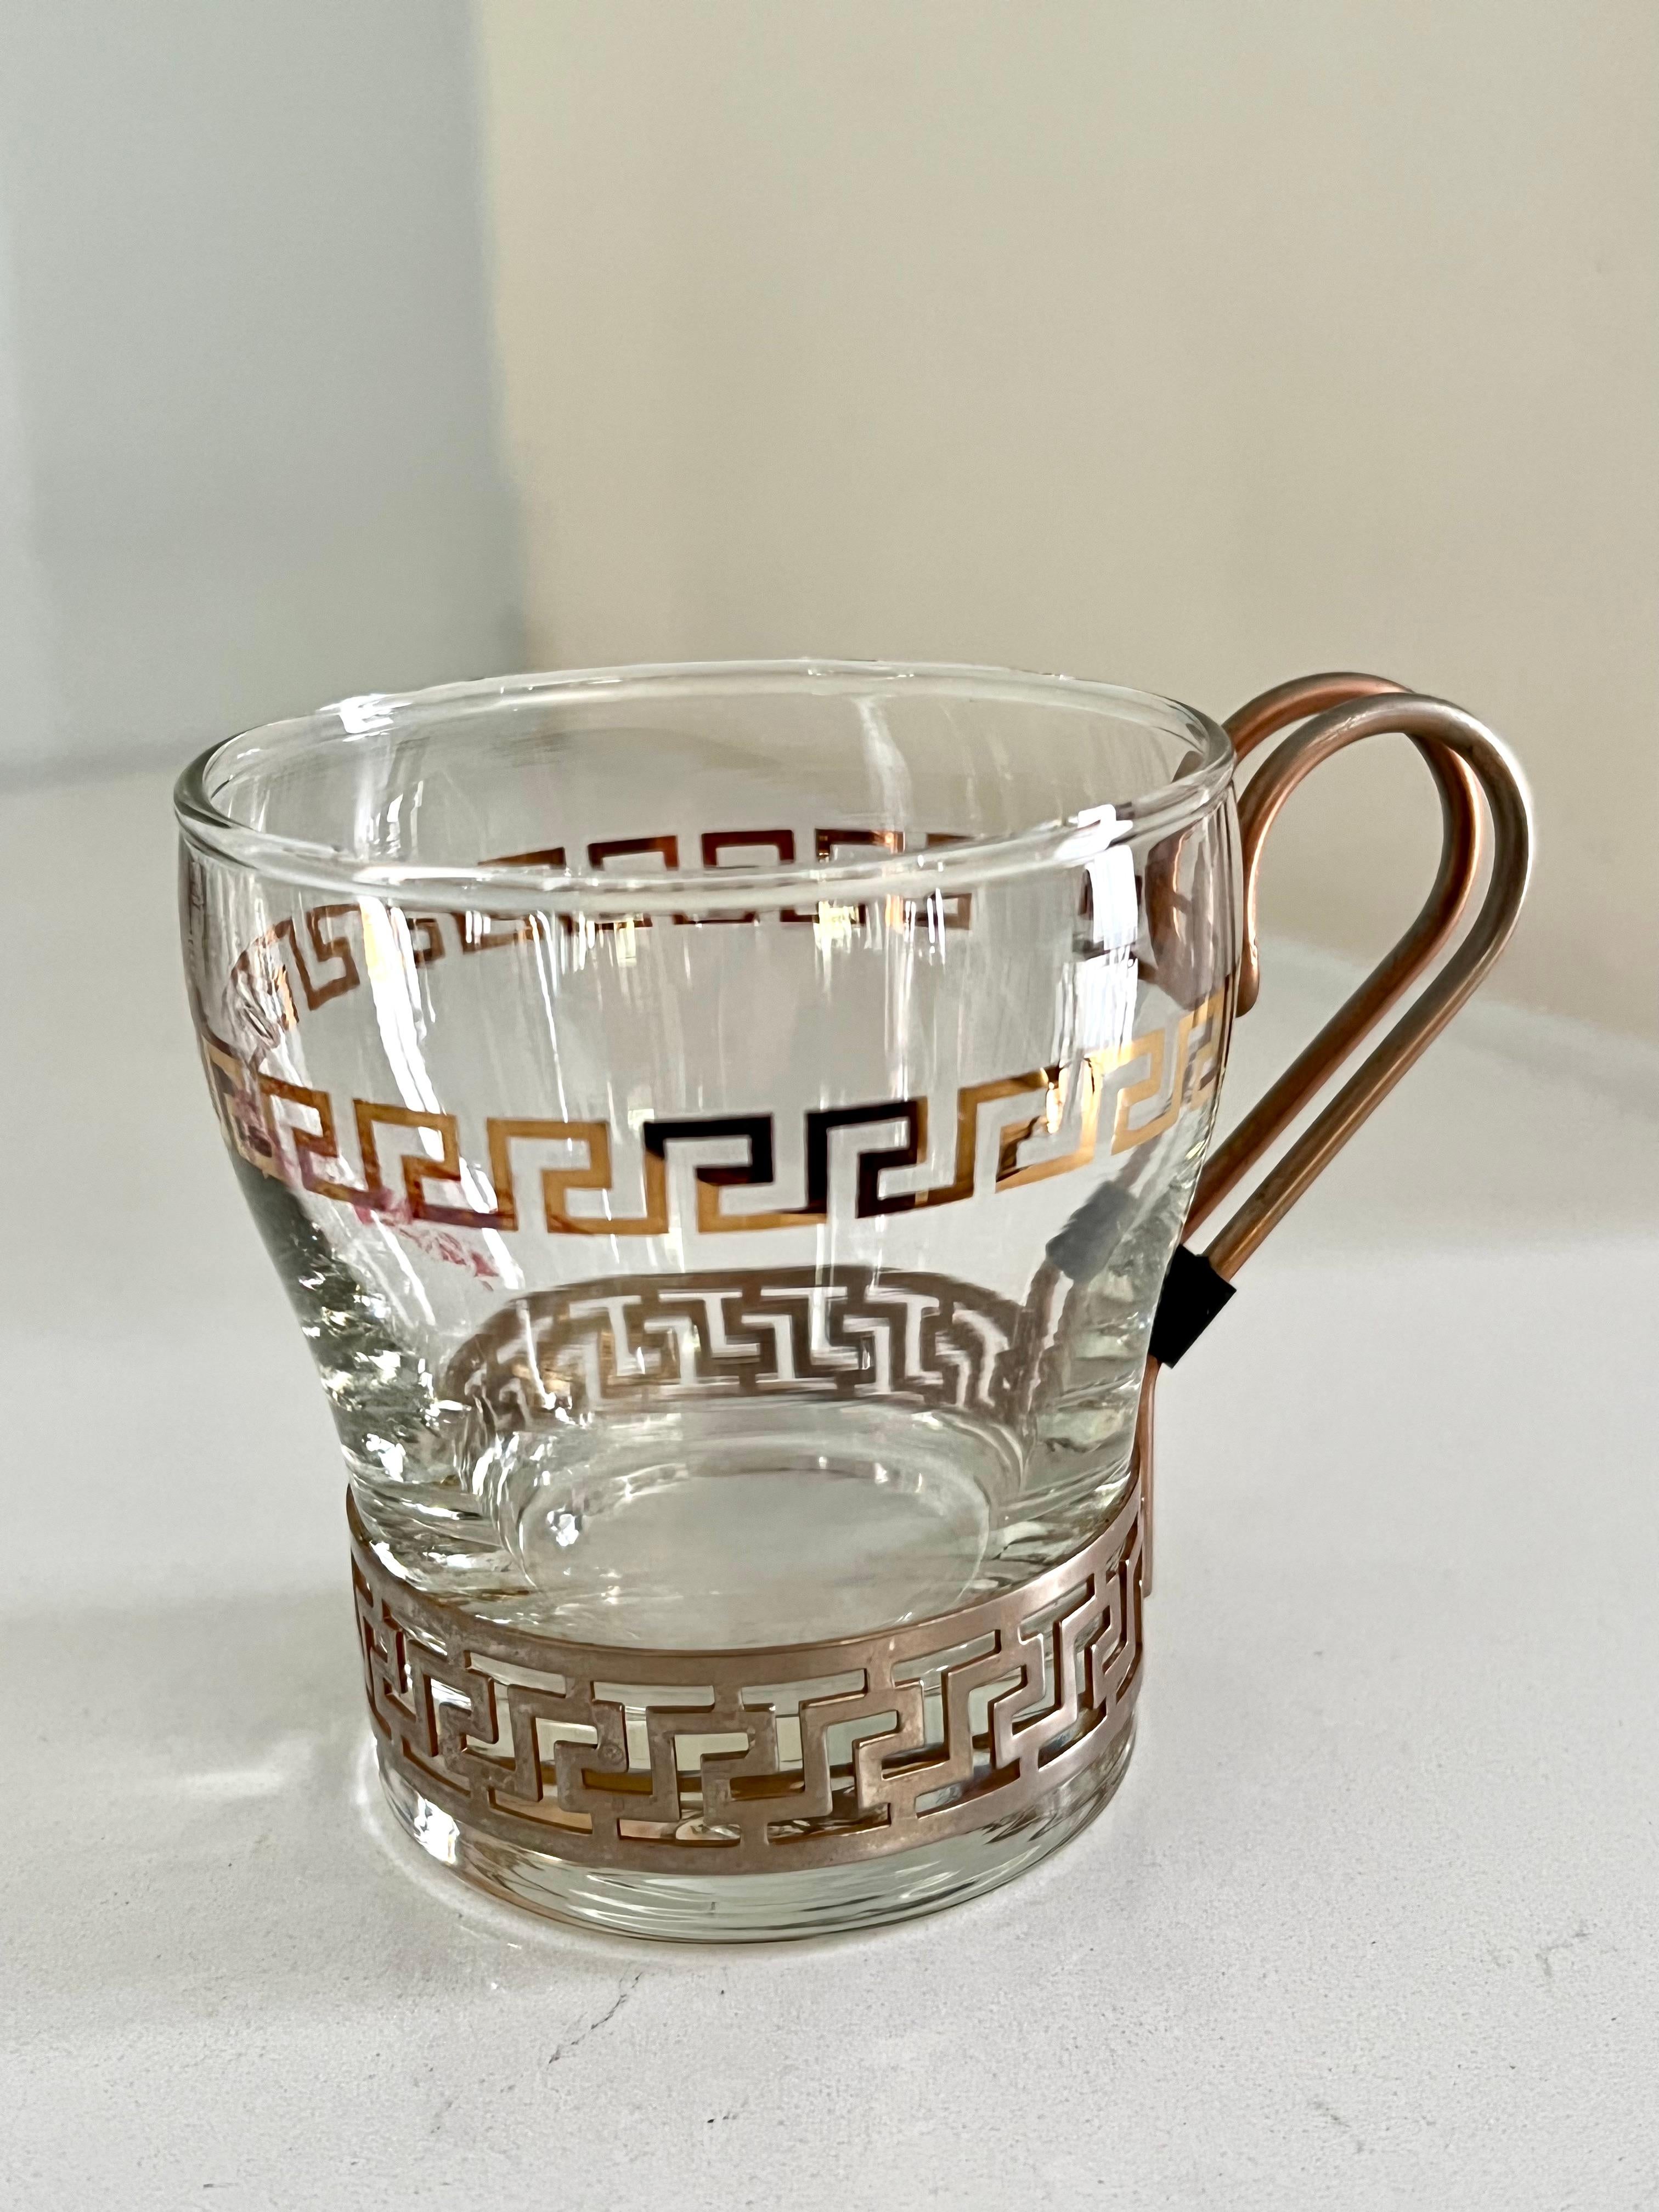 Set of 6 Glasses in Copper Holder with Greek Key Details For Sale 4